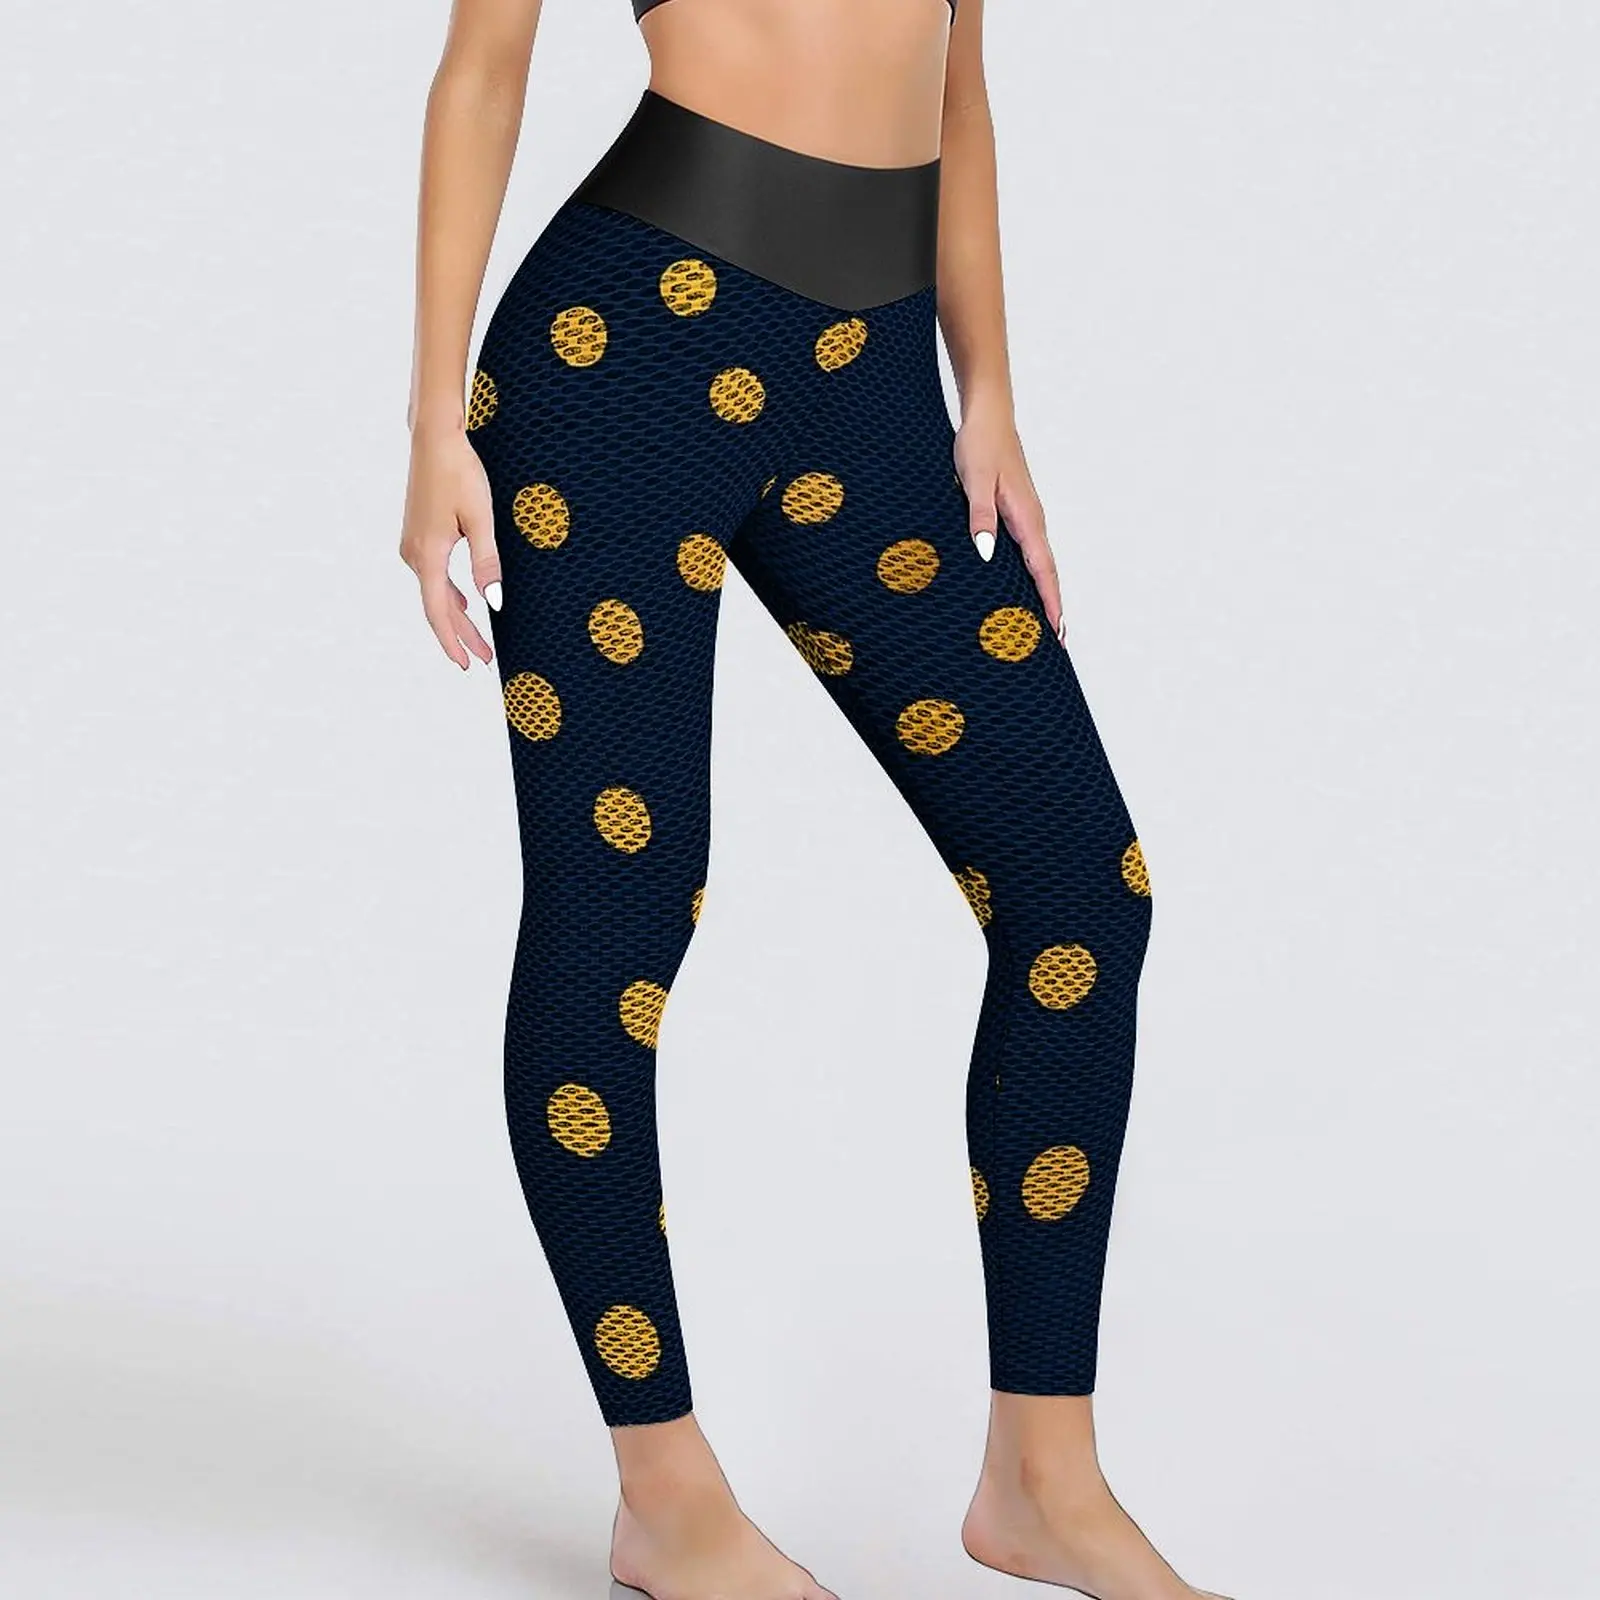 

Gold Dot Print Leggings Sexy Polka Dots Gym Yoga Pants Push Up Stretchy Sports Tights Female Funny Design Leggins Gift Idea